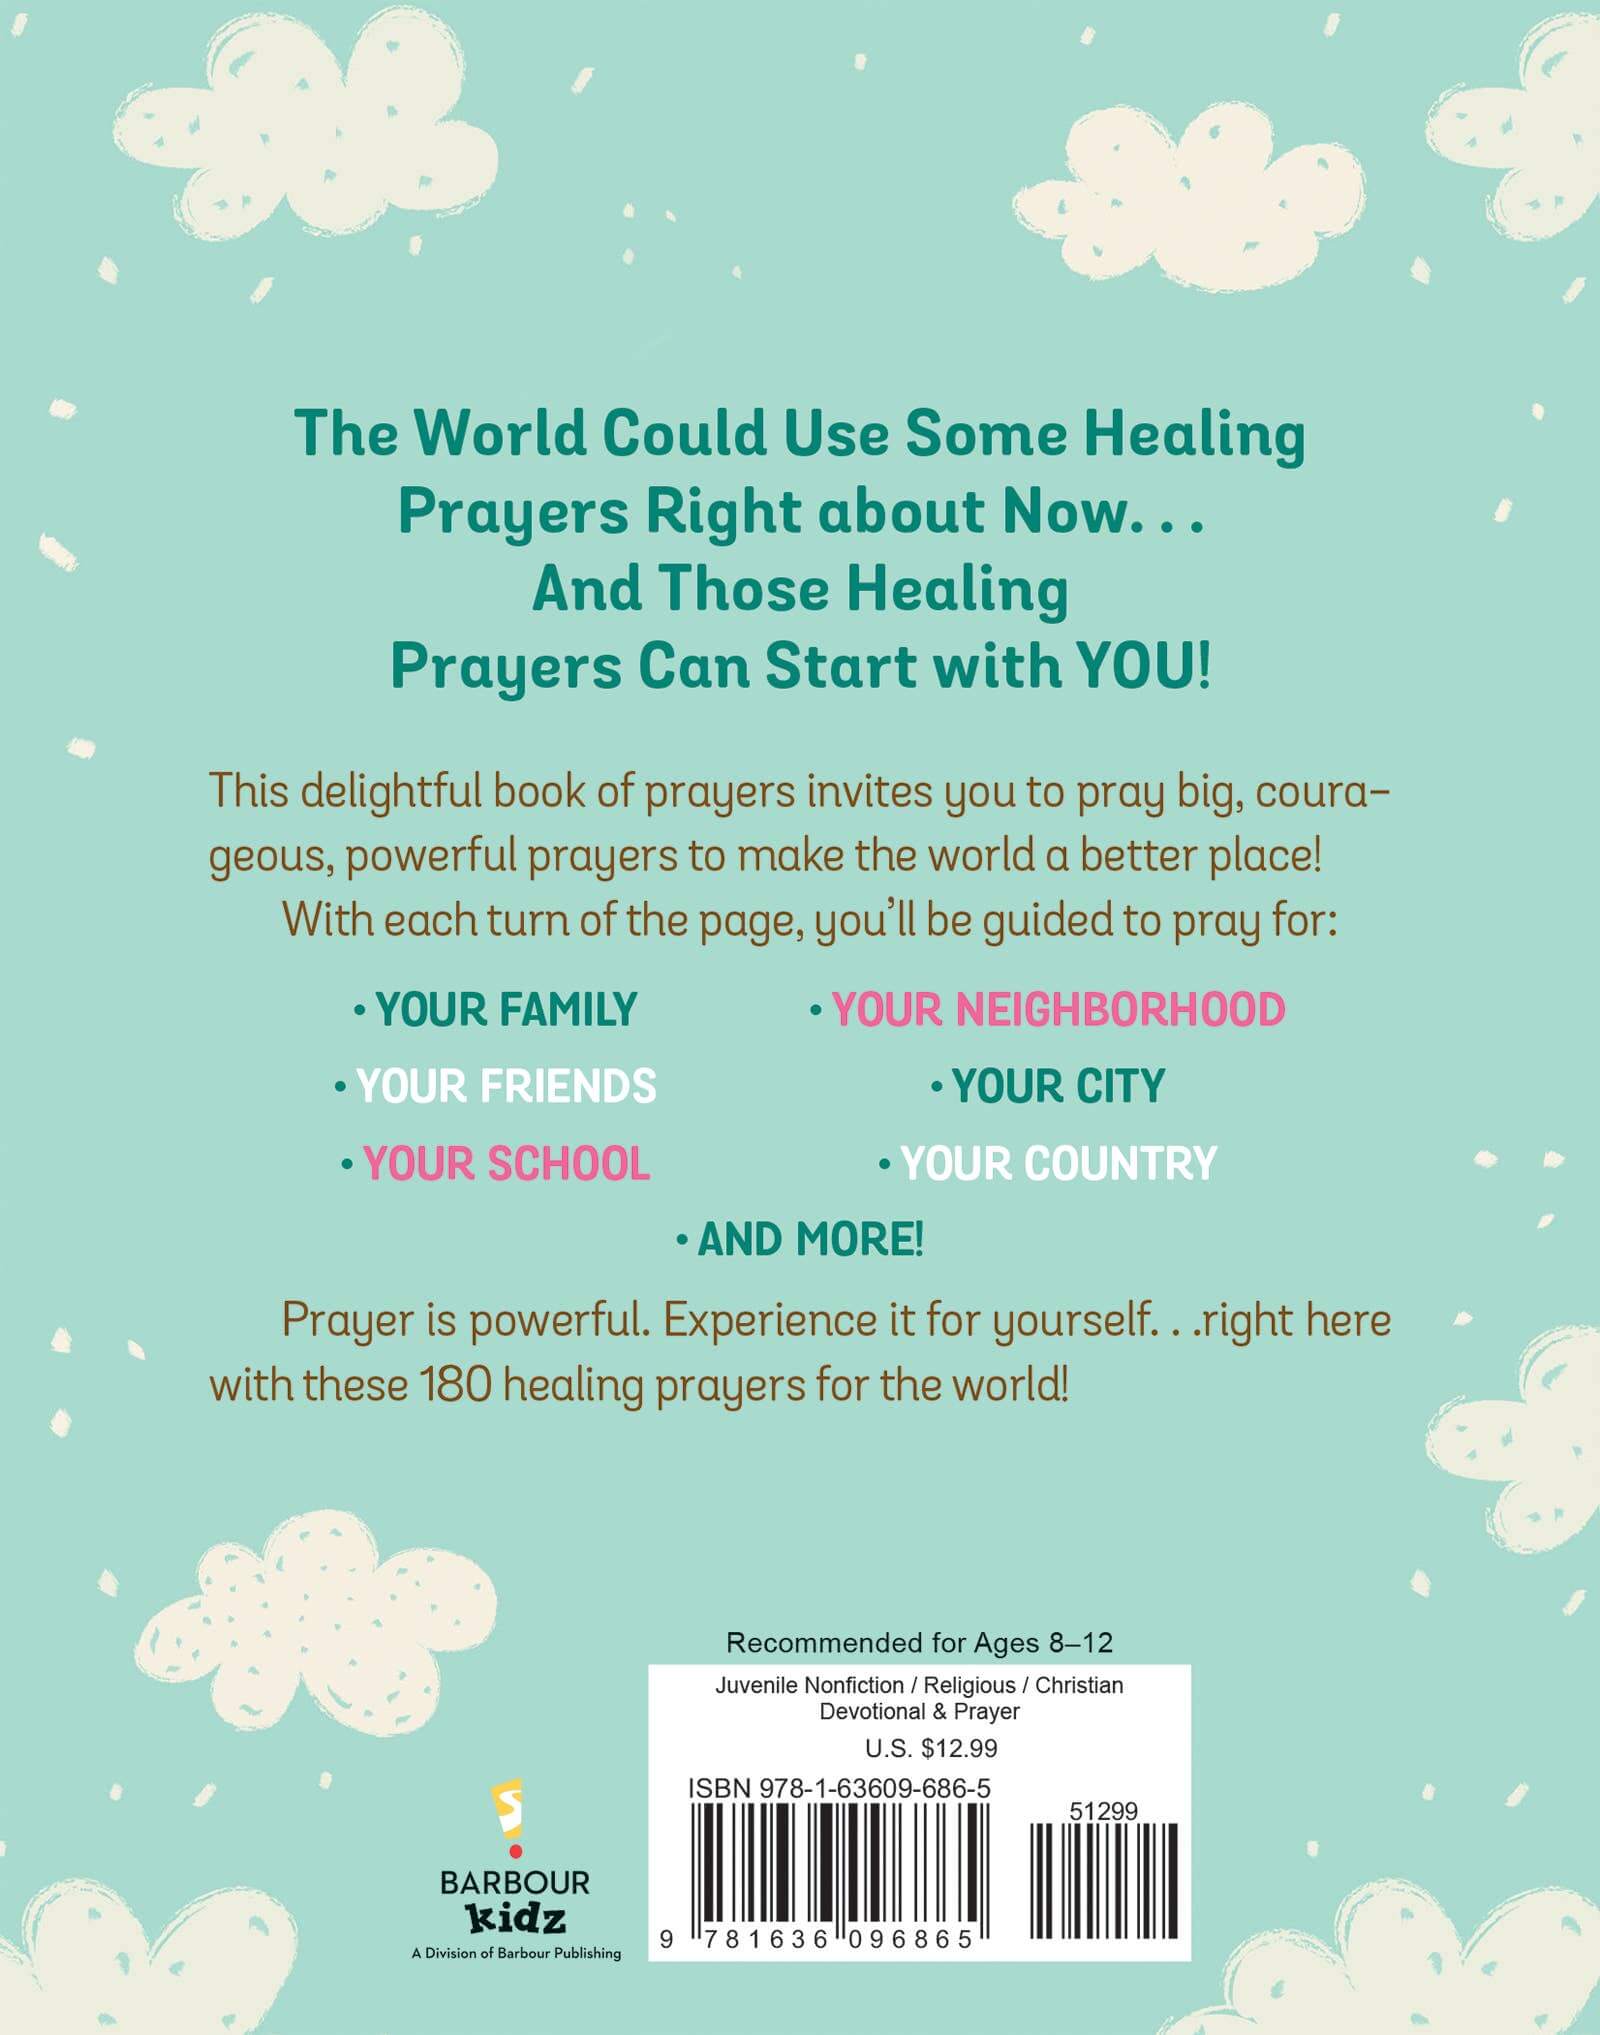 180 Healing Prayers for the World - Young Girls Devotional | 2FruitBearers